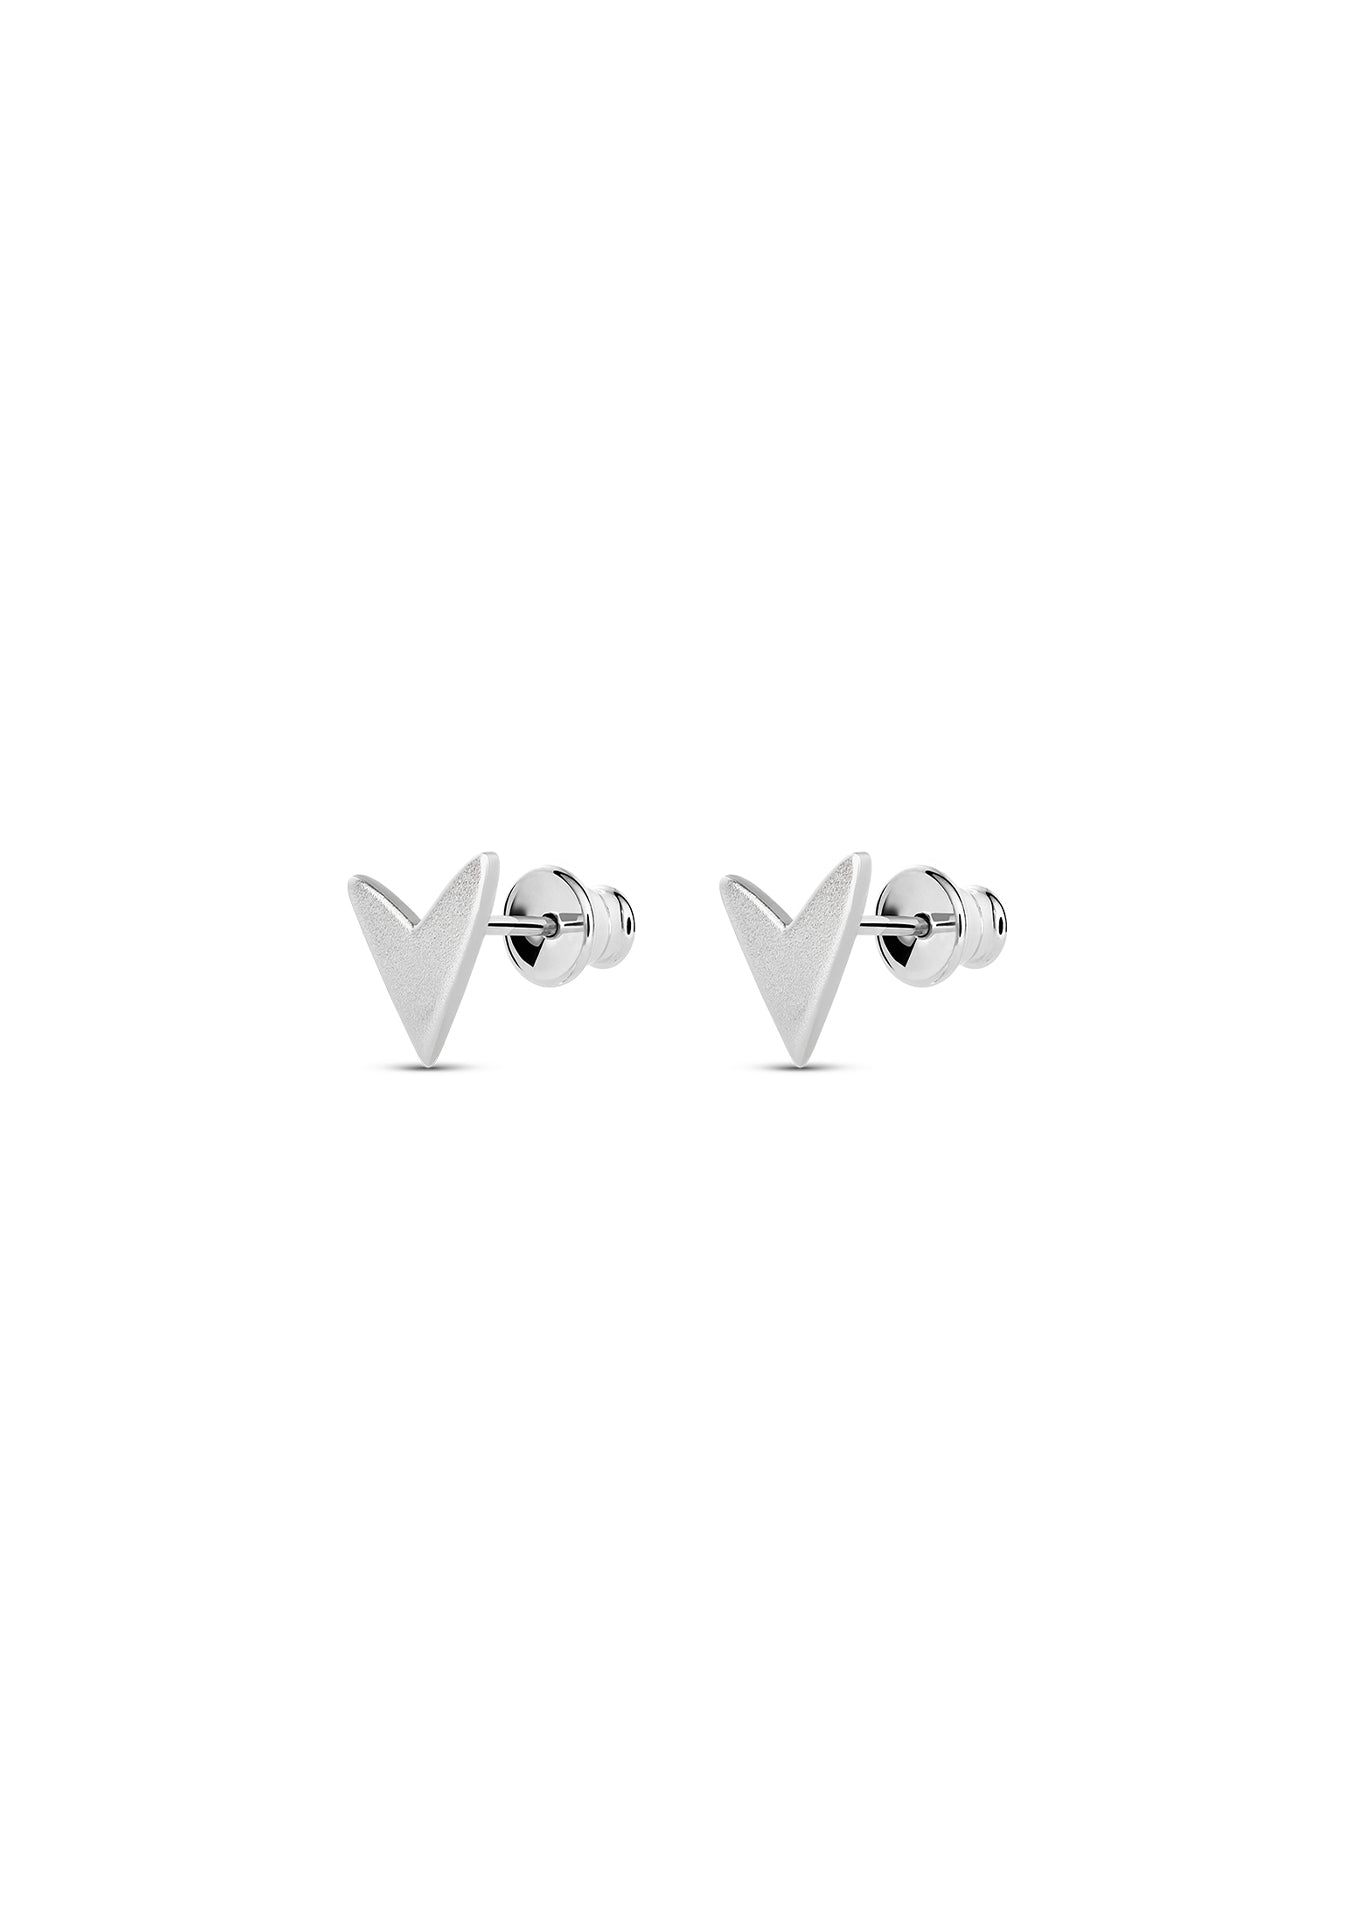 Love_Stud_Earrings_NOMORE_accessories_Sterling_Silver_Handmade_Jewelry